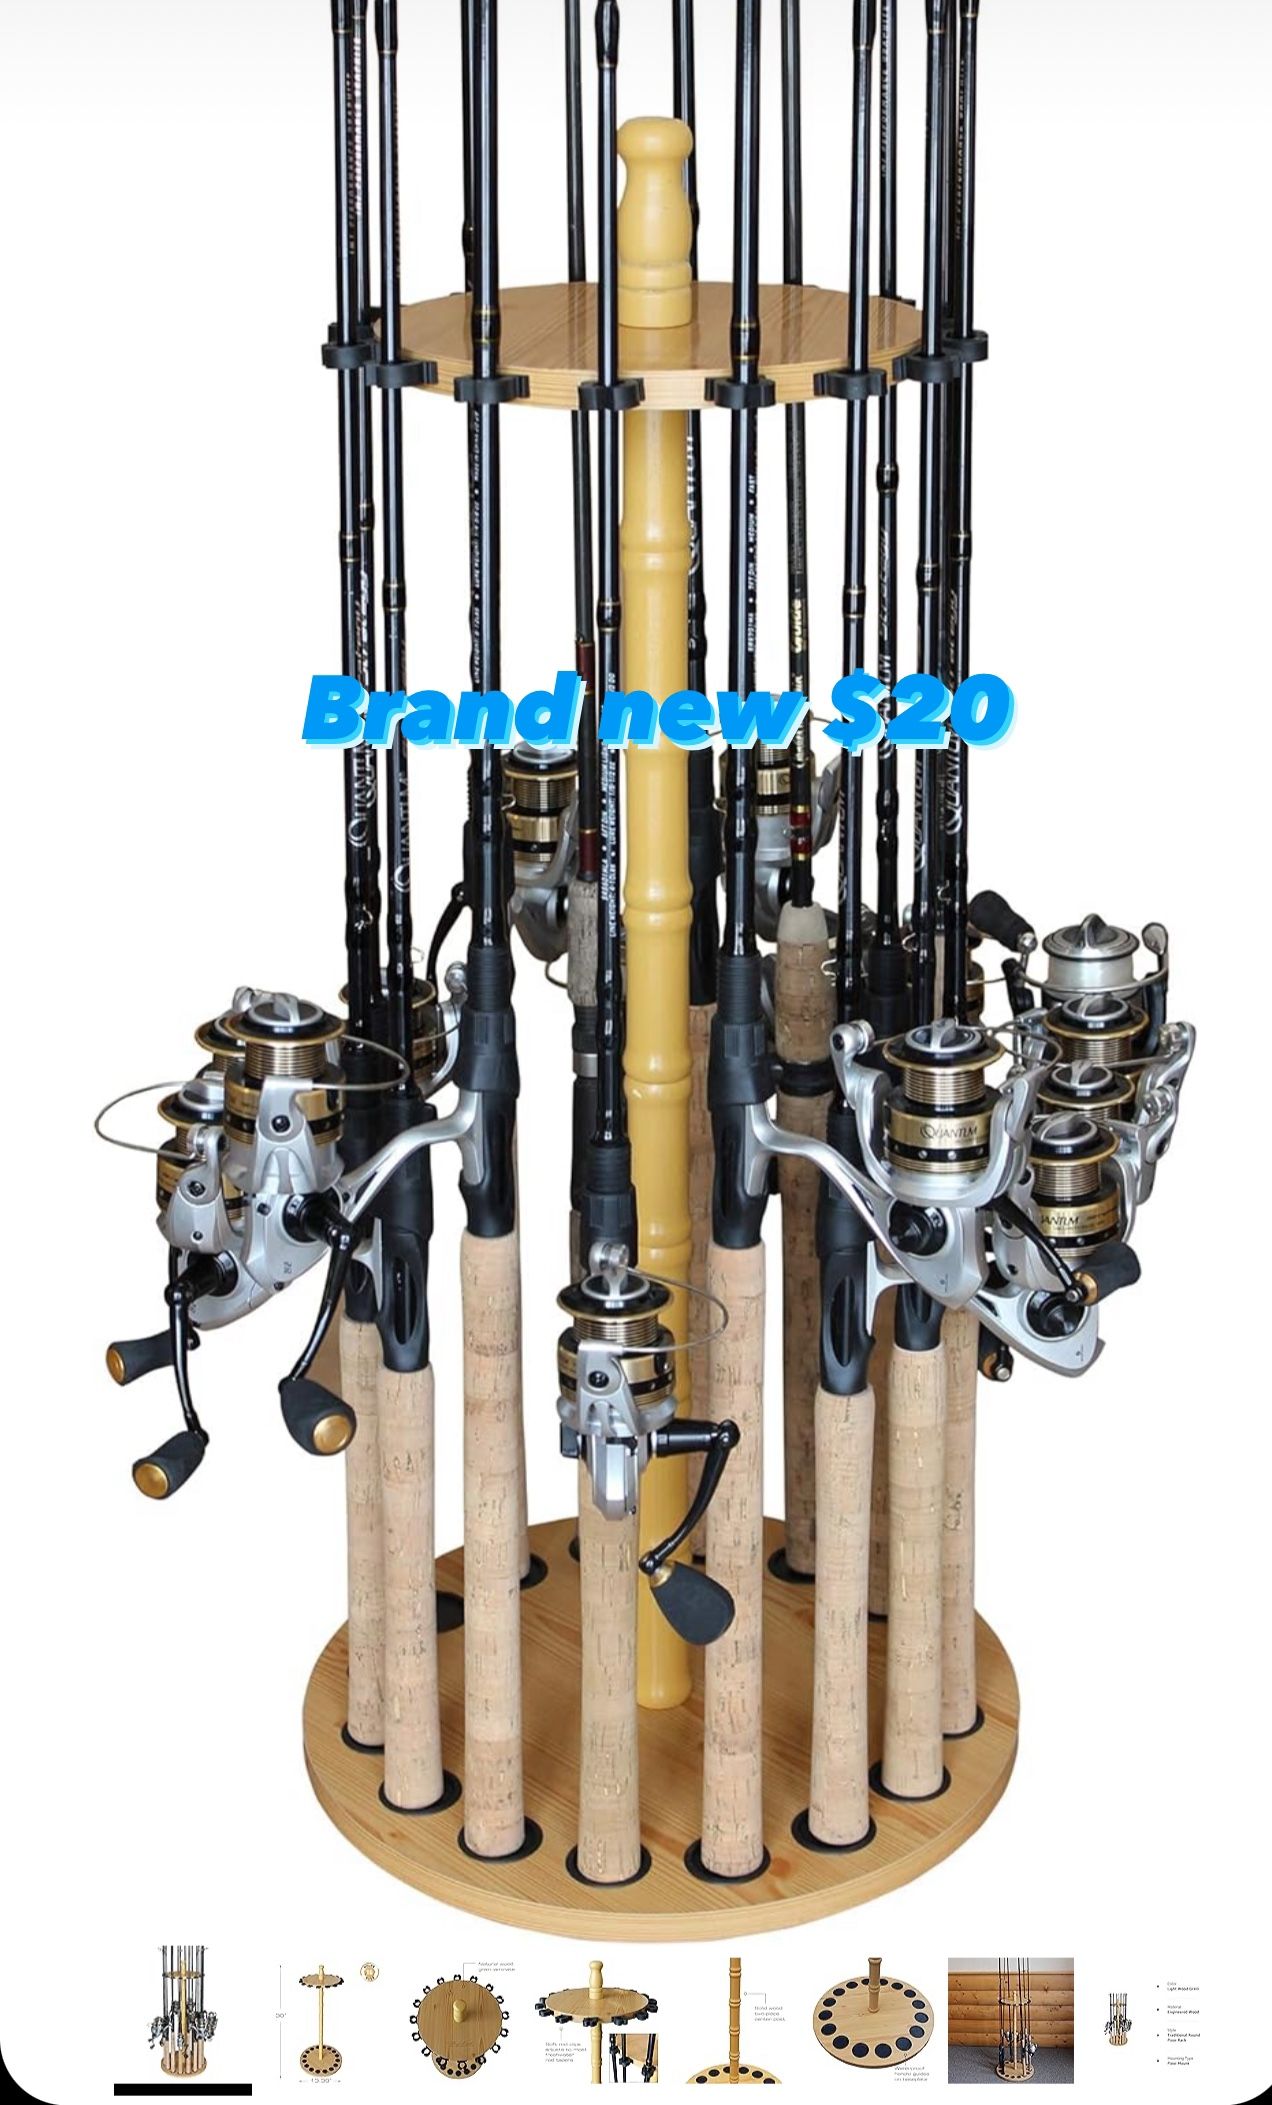 Fishing rod Rack 